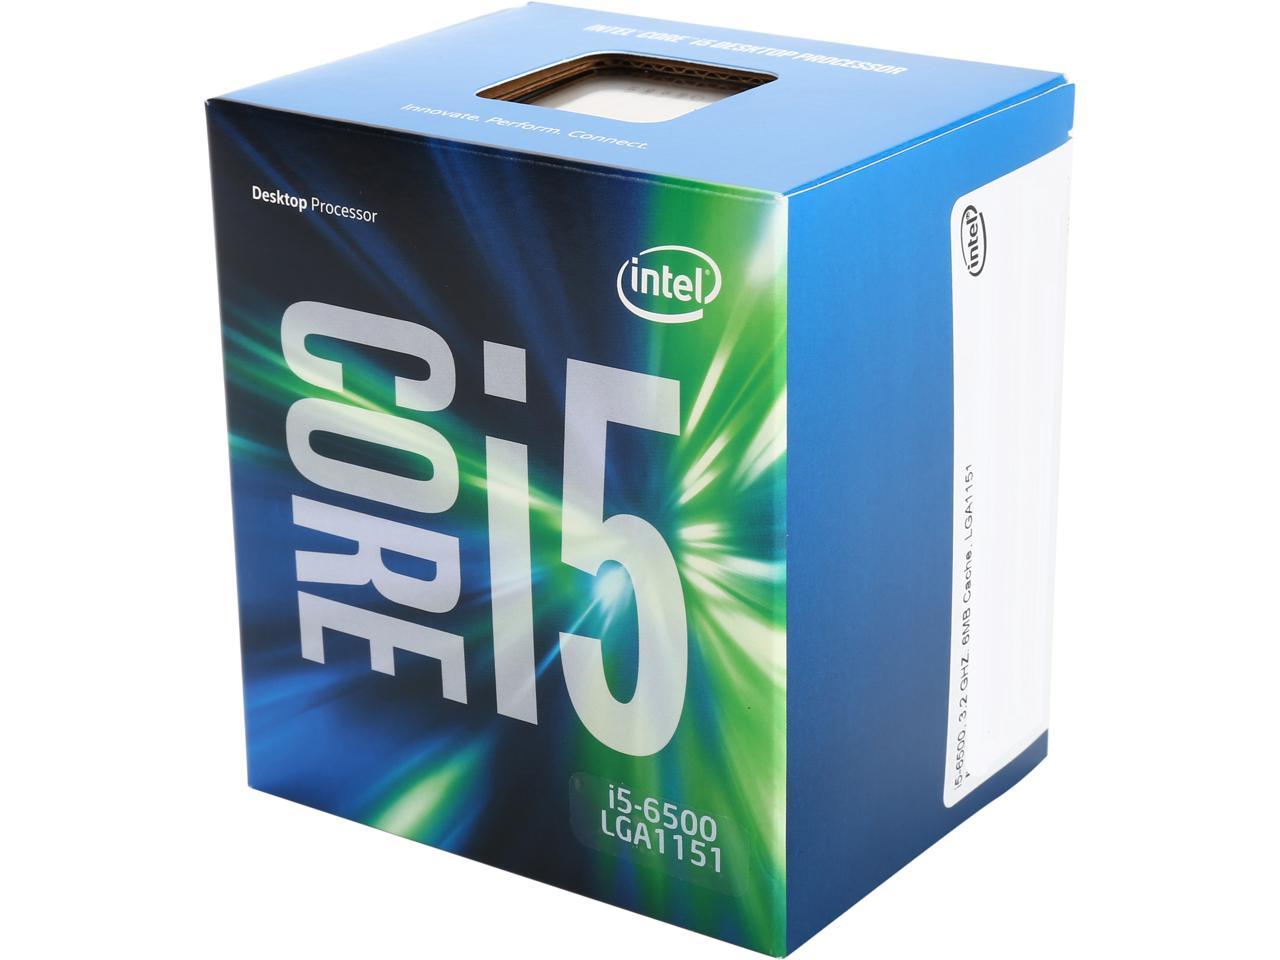 Intel Core i5-6500 Skylake Quad-Core 3.2 GHz LGA 1151 65W BX80662I56500 Desktop Processor Intel HD Graphics 530